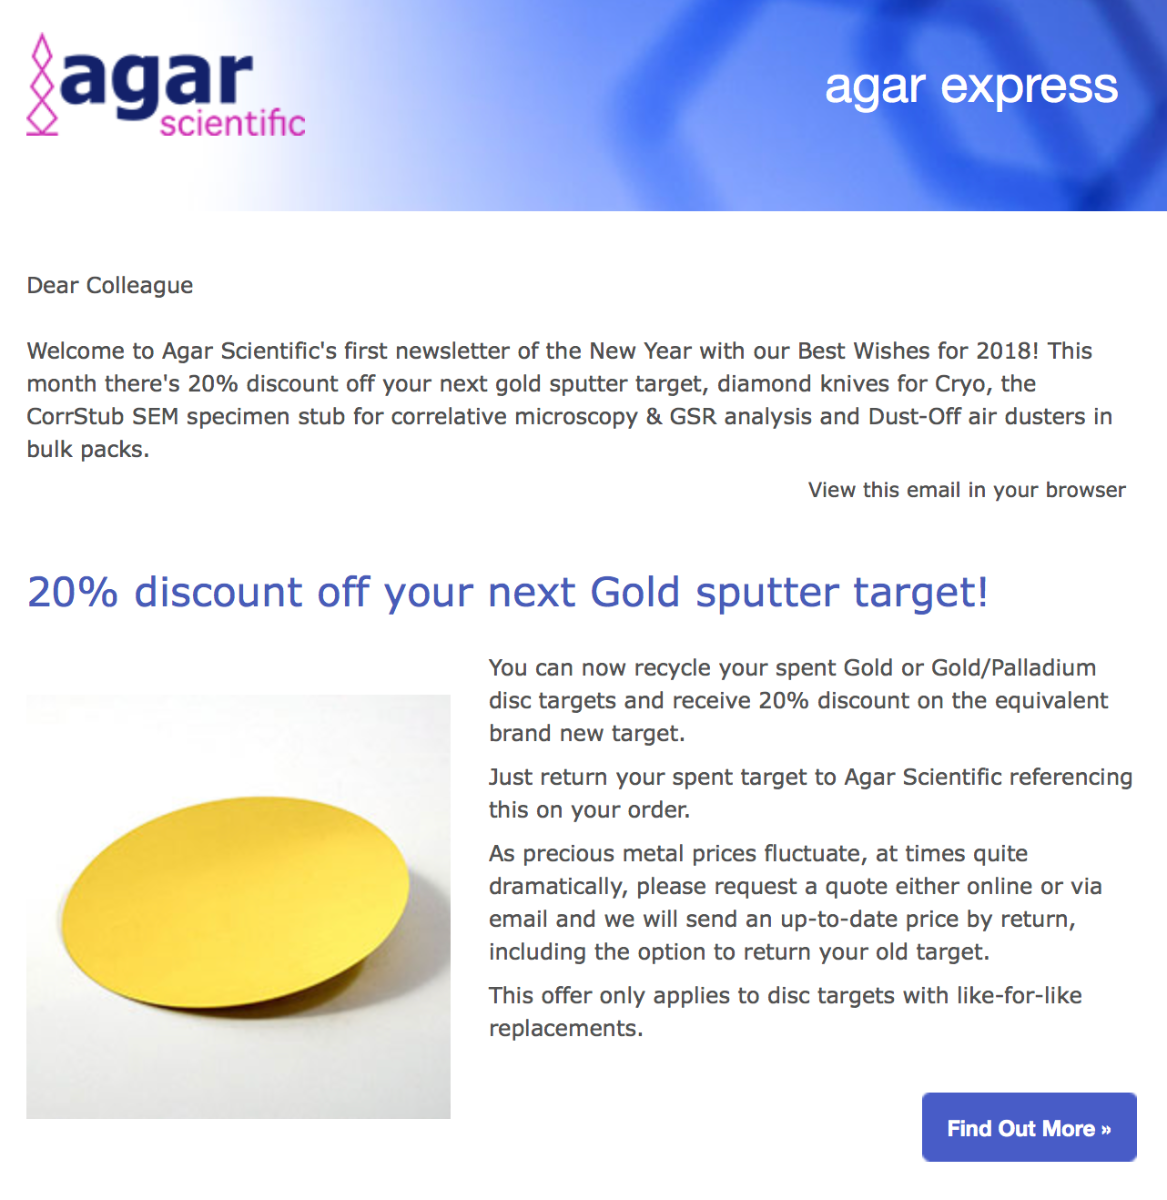 Agar Express January 2018 - 20% discount off your next Gold sputter target & more...